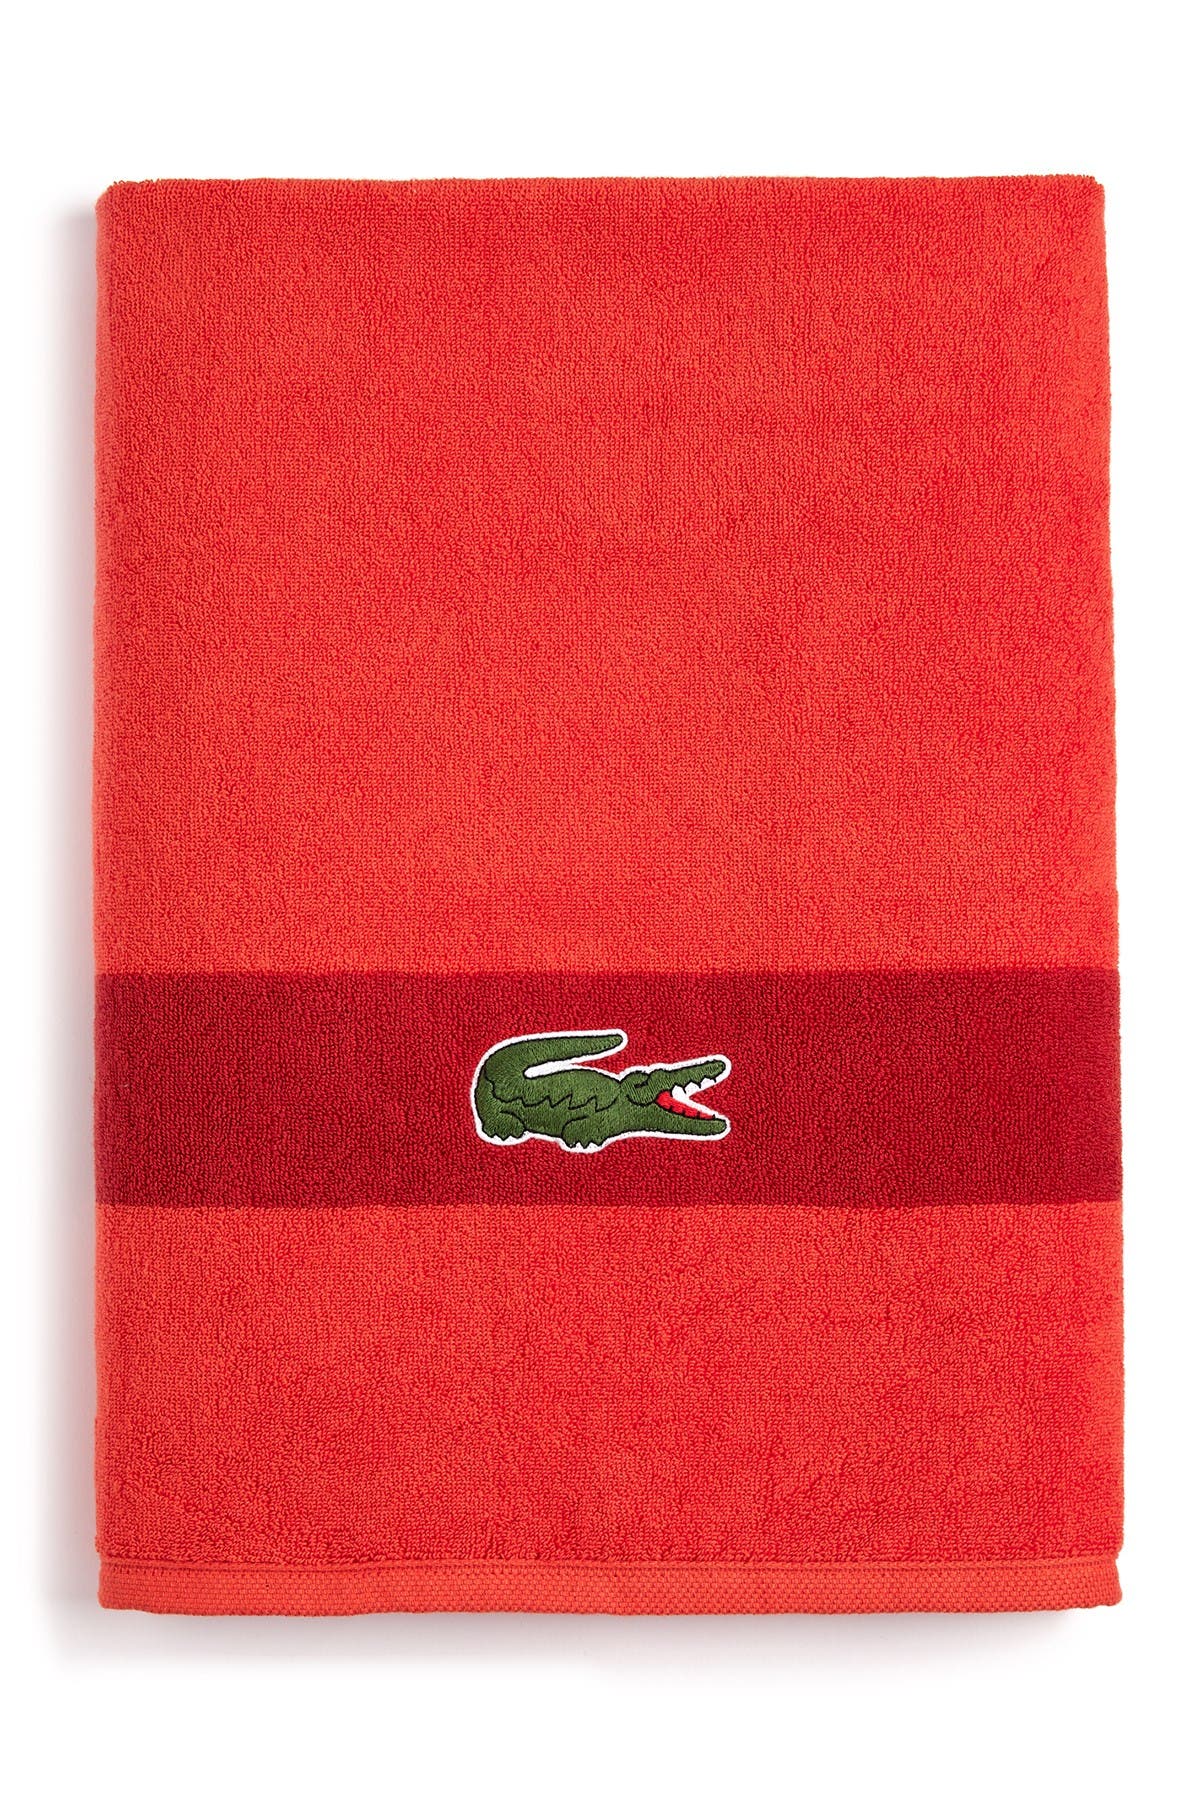 Lacoste | Logo Towel Bath Towel - Flame 